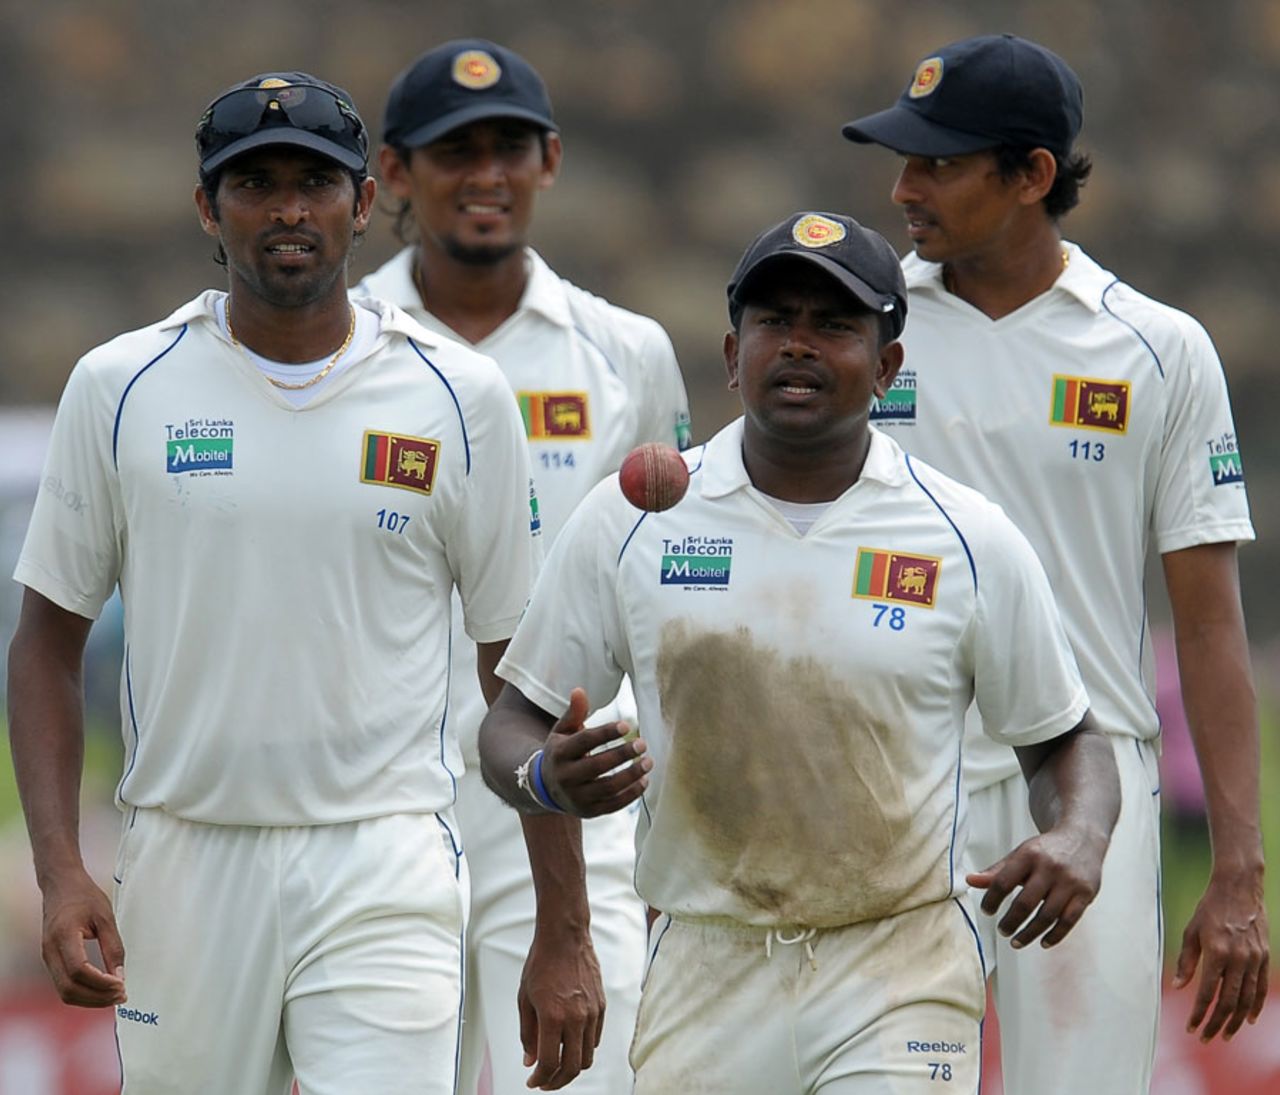 Rangana Herath keeps the ball after his five-for, Sri Lanka v Australia, 1st Test, Galle, 3rd day, September 2, 2011